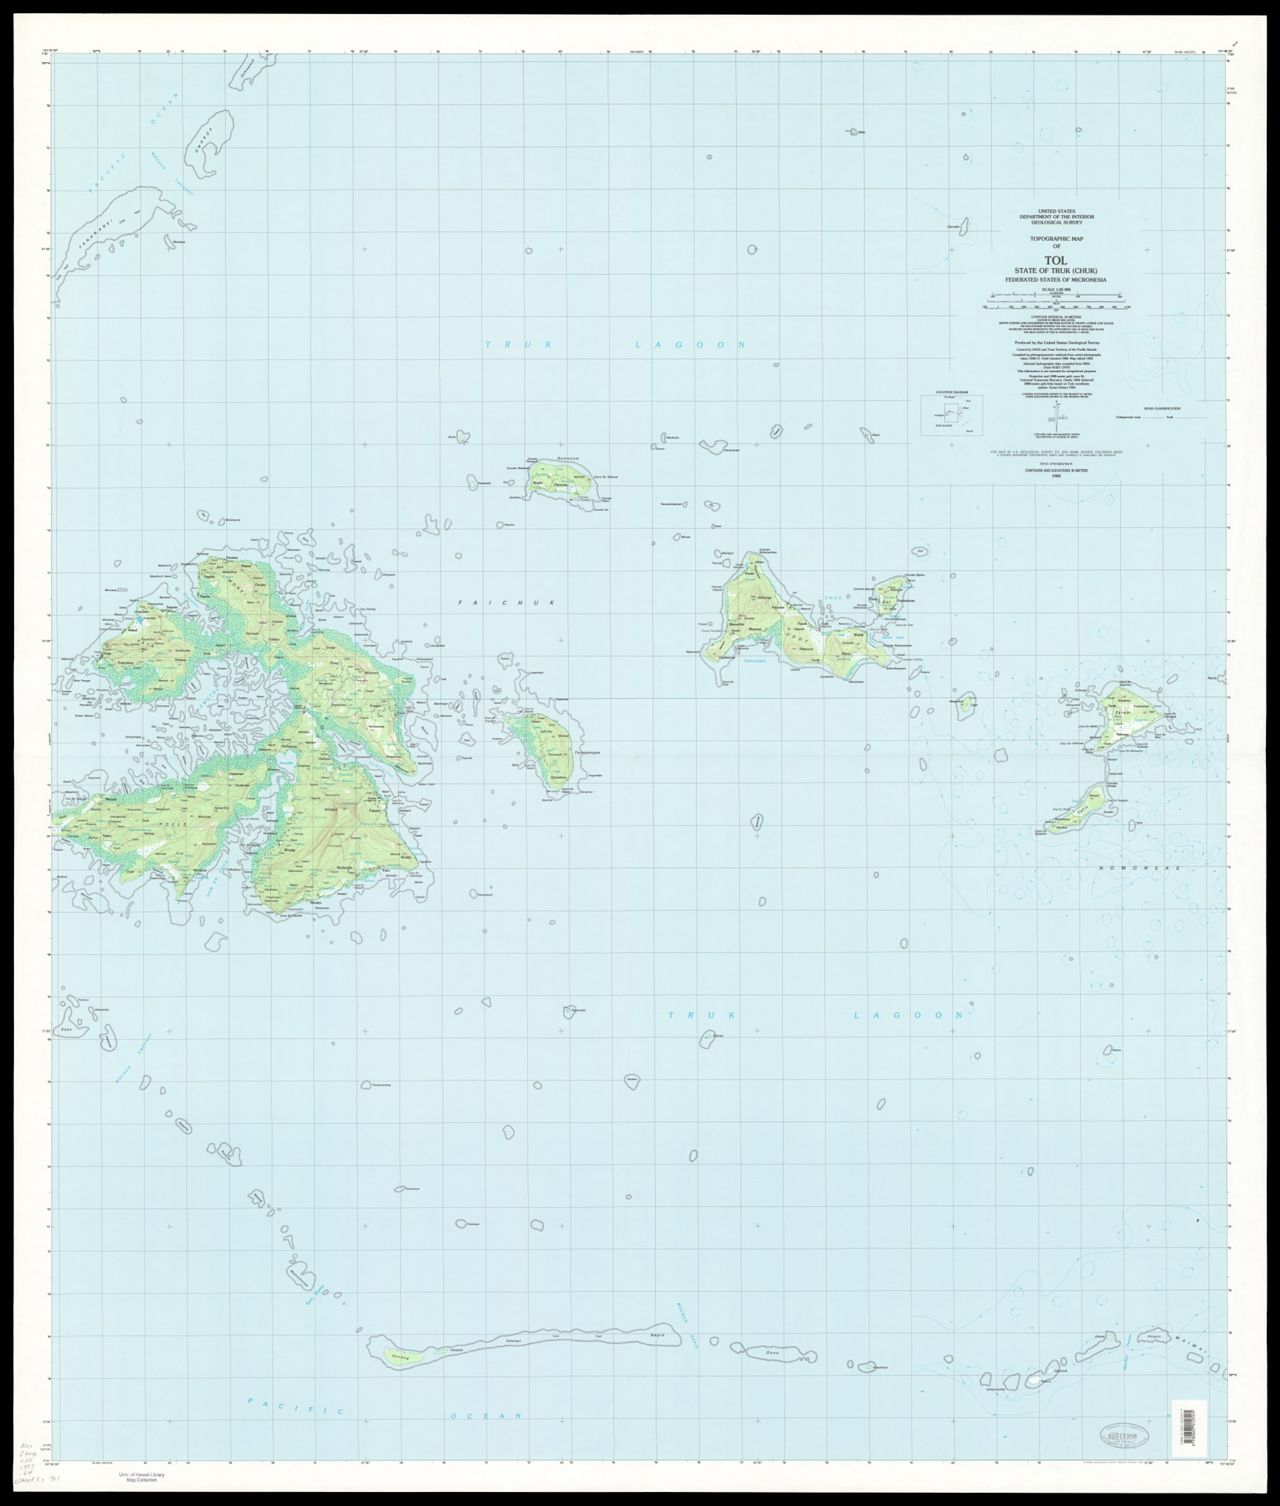 Truk (Chuuk) Index Map 1983